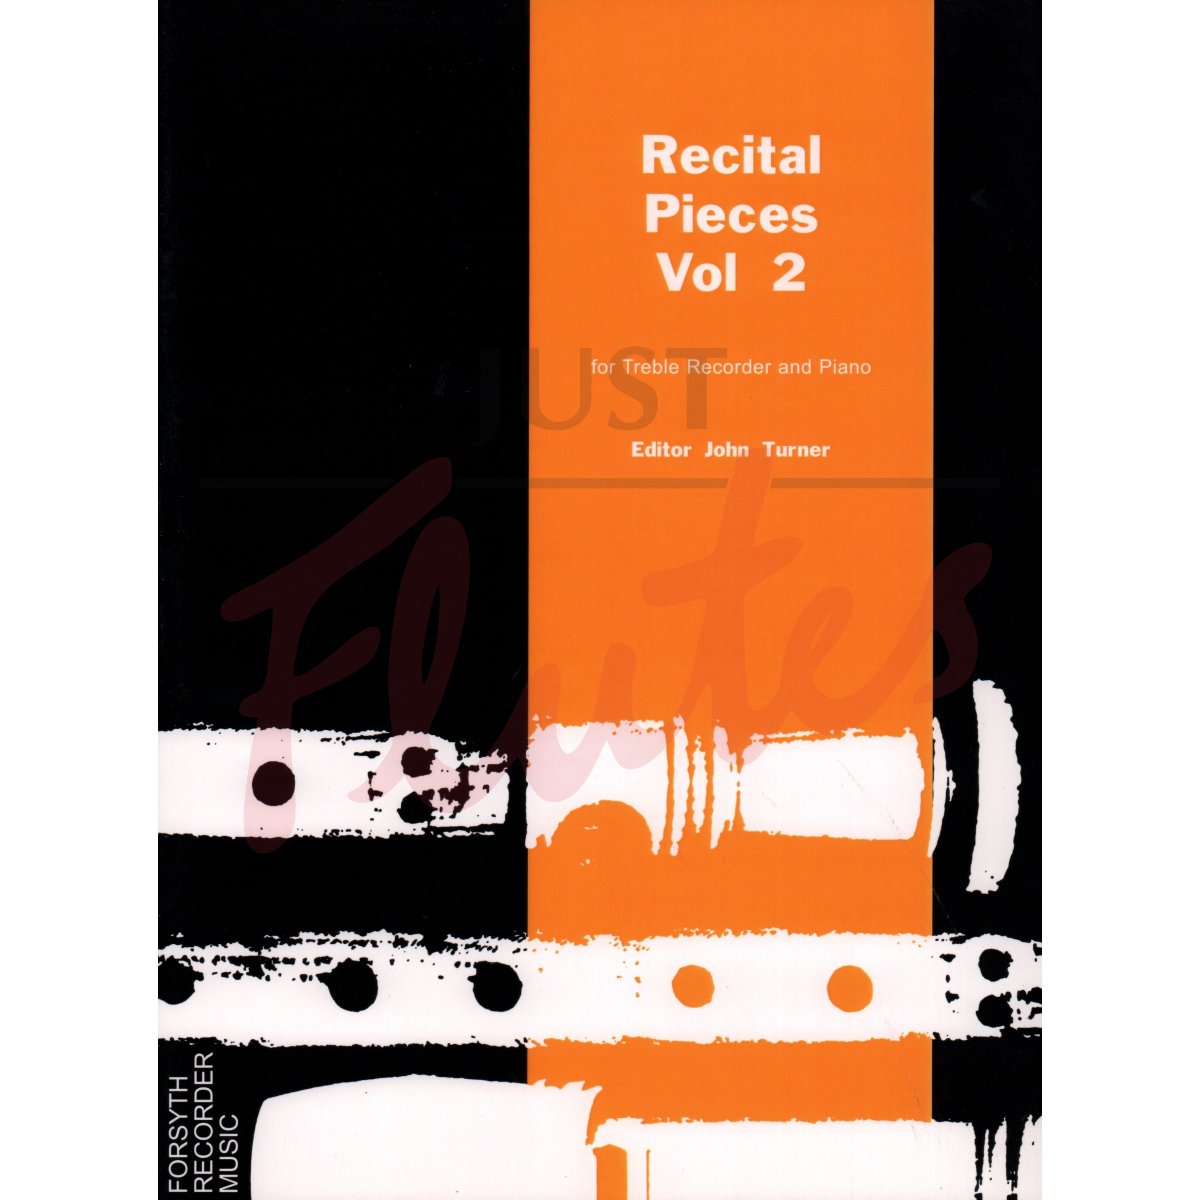 Recital Pieces for Treble Recorder and Piano Vol.2